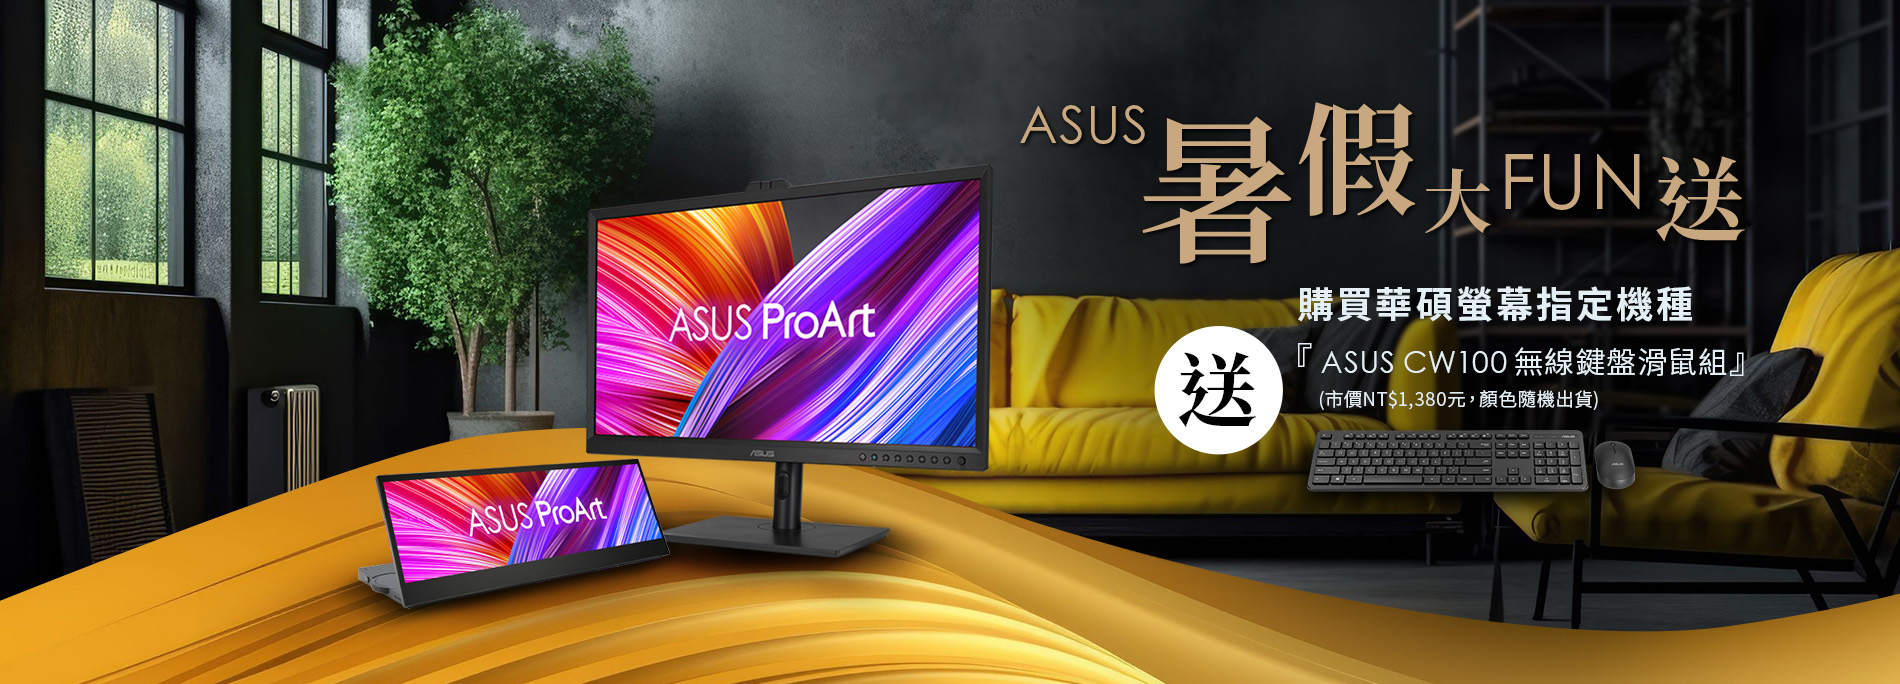 【ASUS暑假大FUN送】活動期間，購買華碩螢幕指定機種，官網登錄送『ASUS CW100 無線鍵盤滑鼠組』